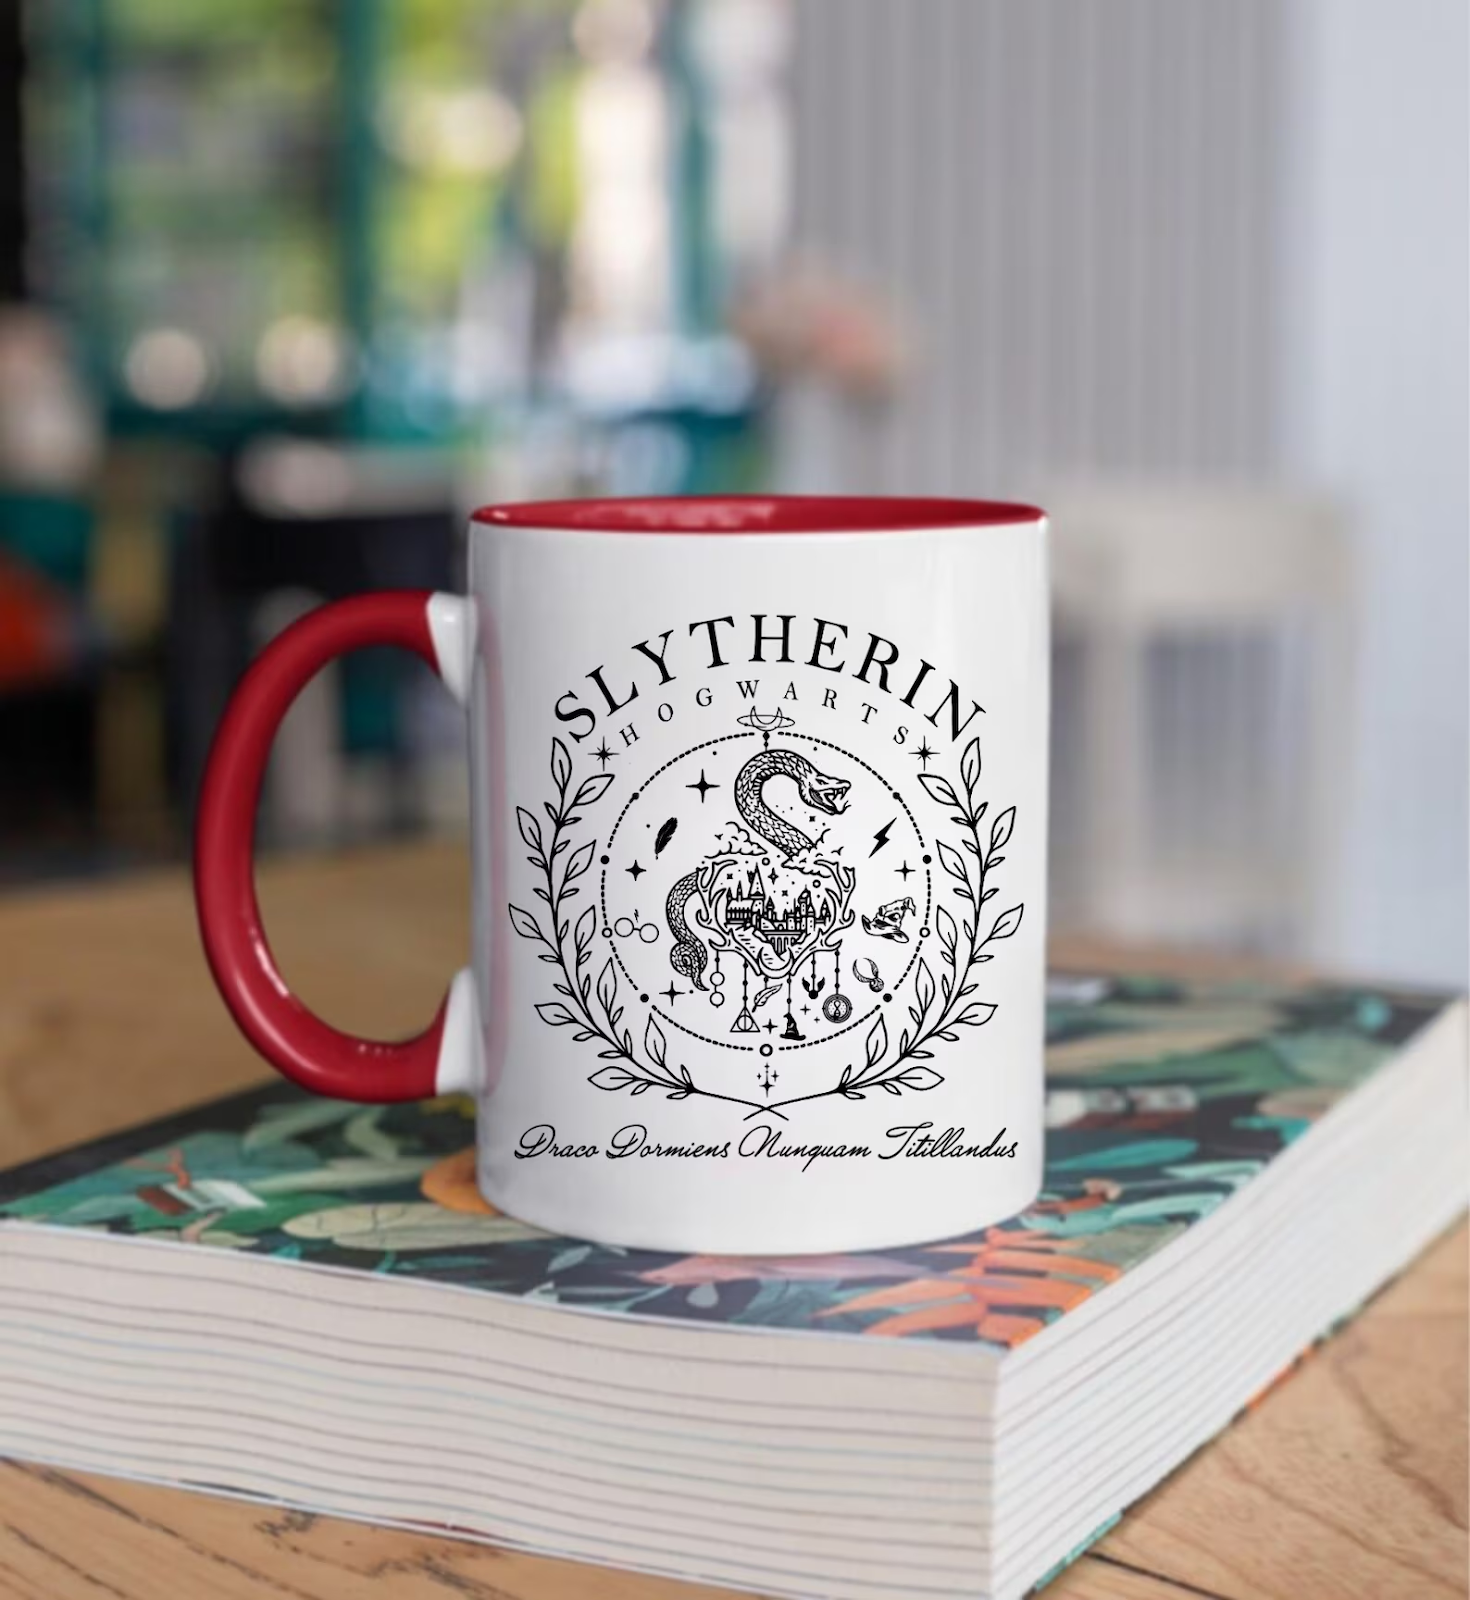 A mug with the Slytherin house crest